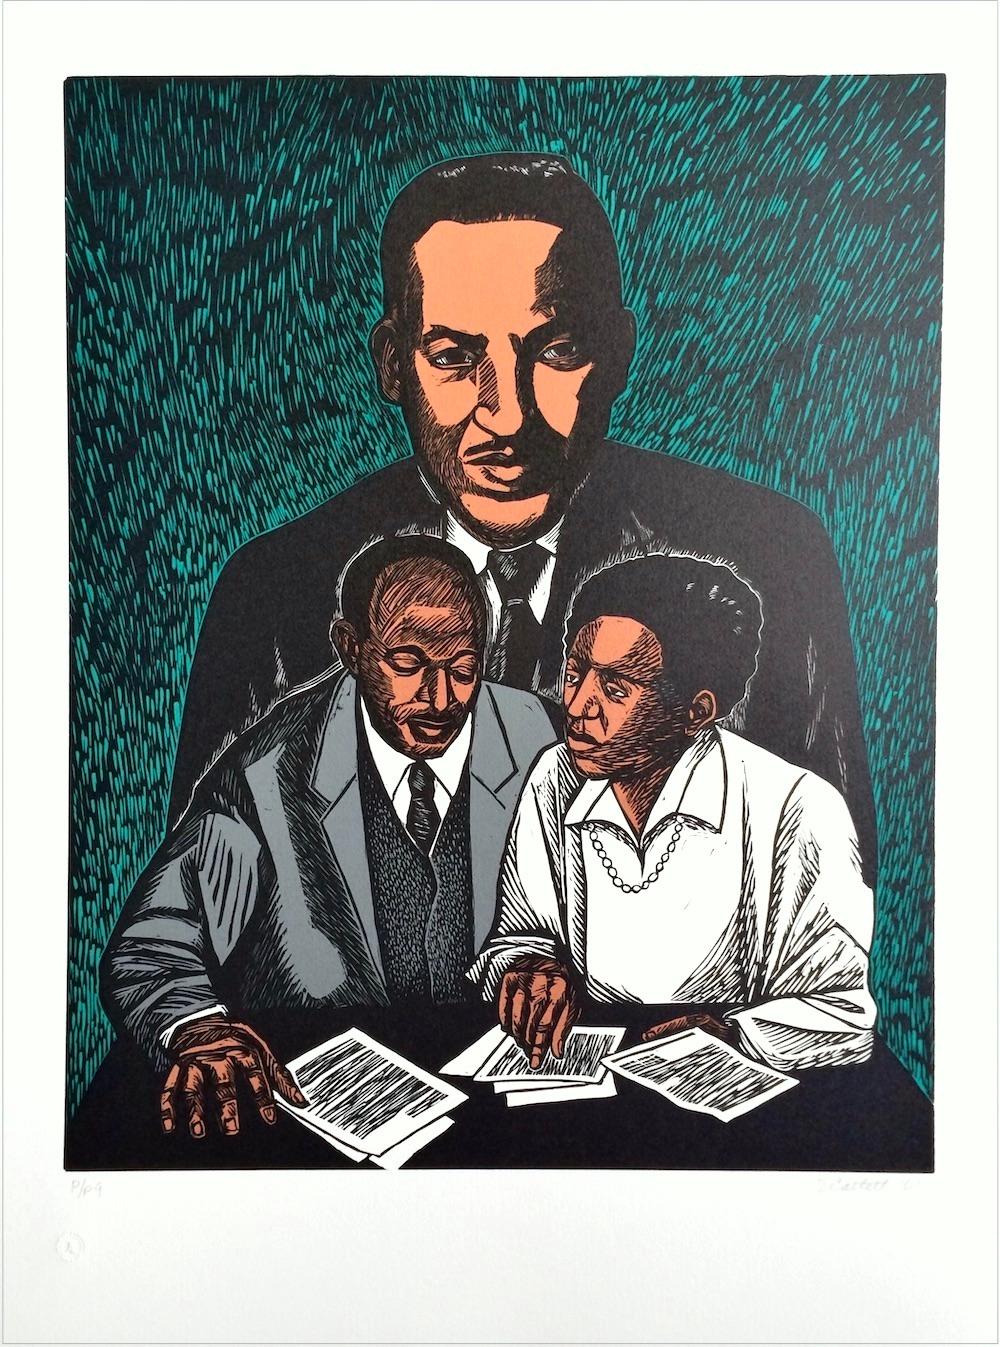 CRUSADERS FOR JUSTICE signé Linocut, portrait de Thurgood Marshall, droits civiques